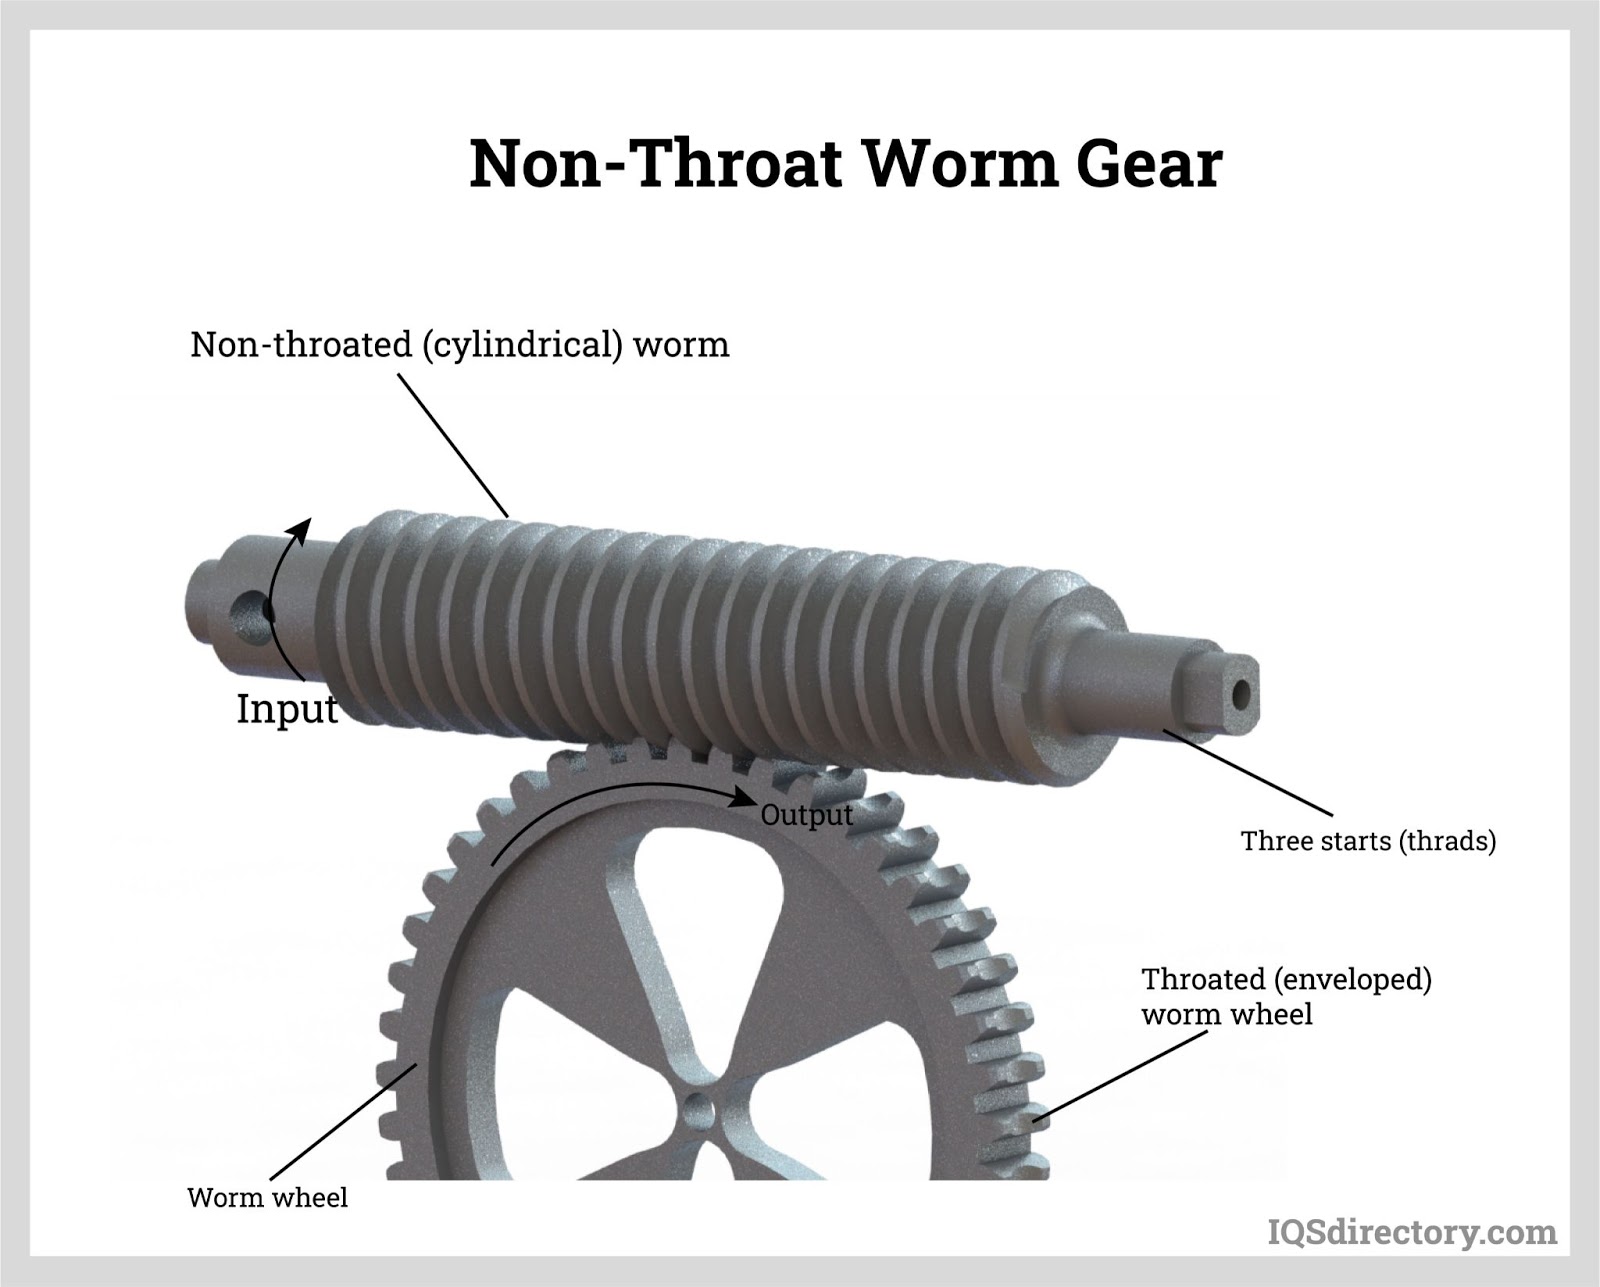 Non-Throat Worm Gear